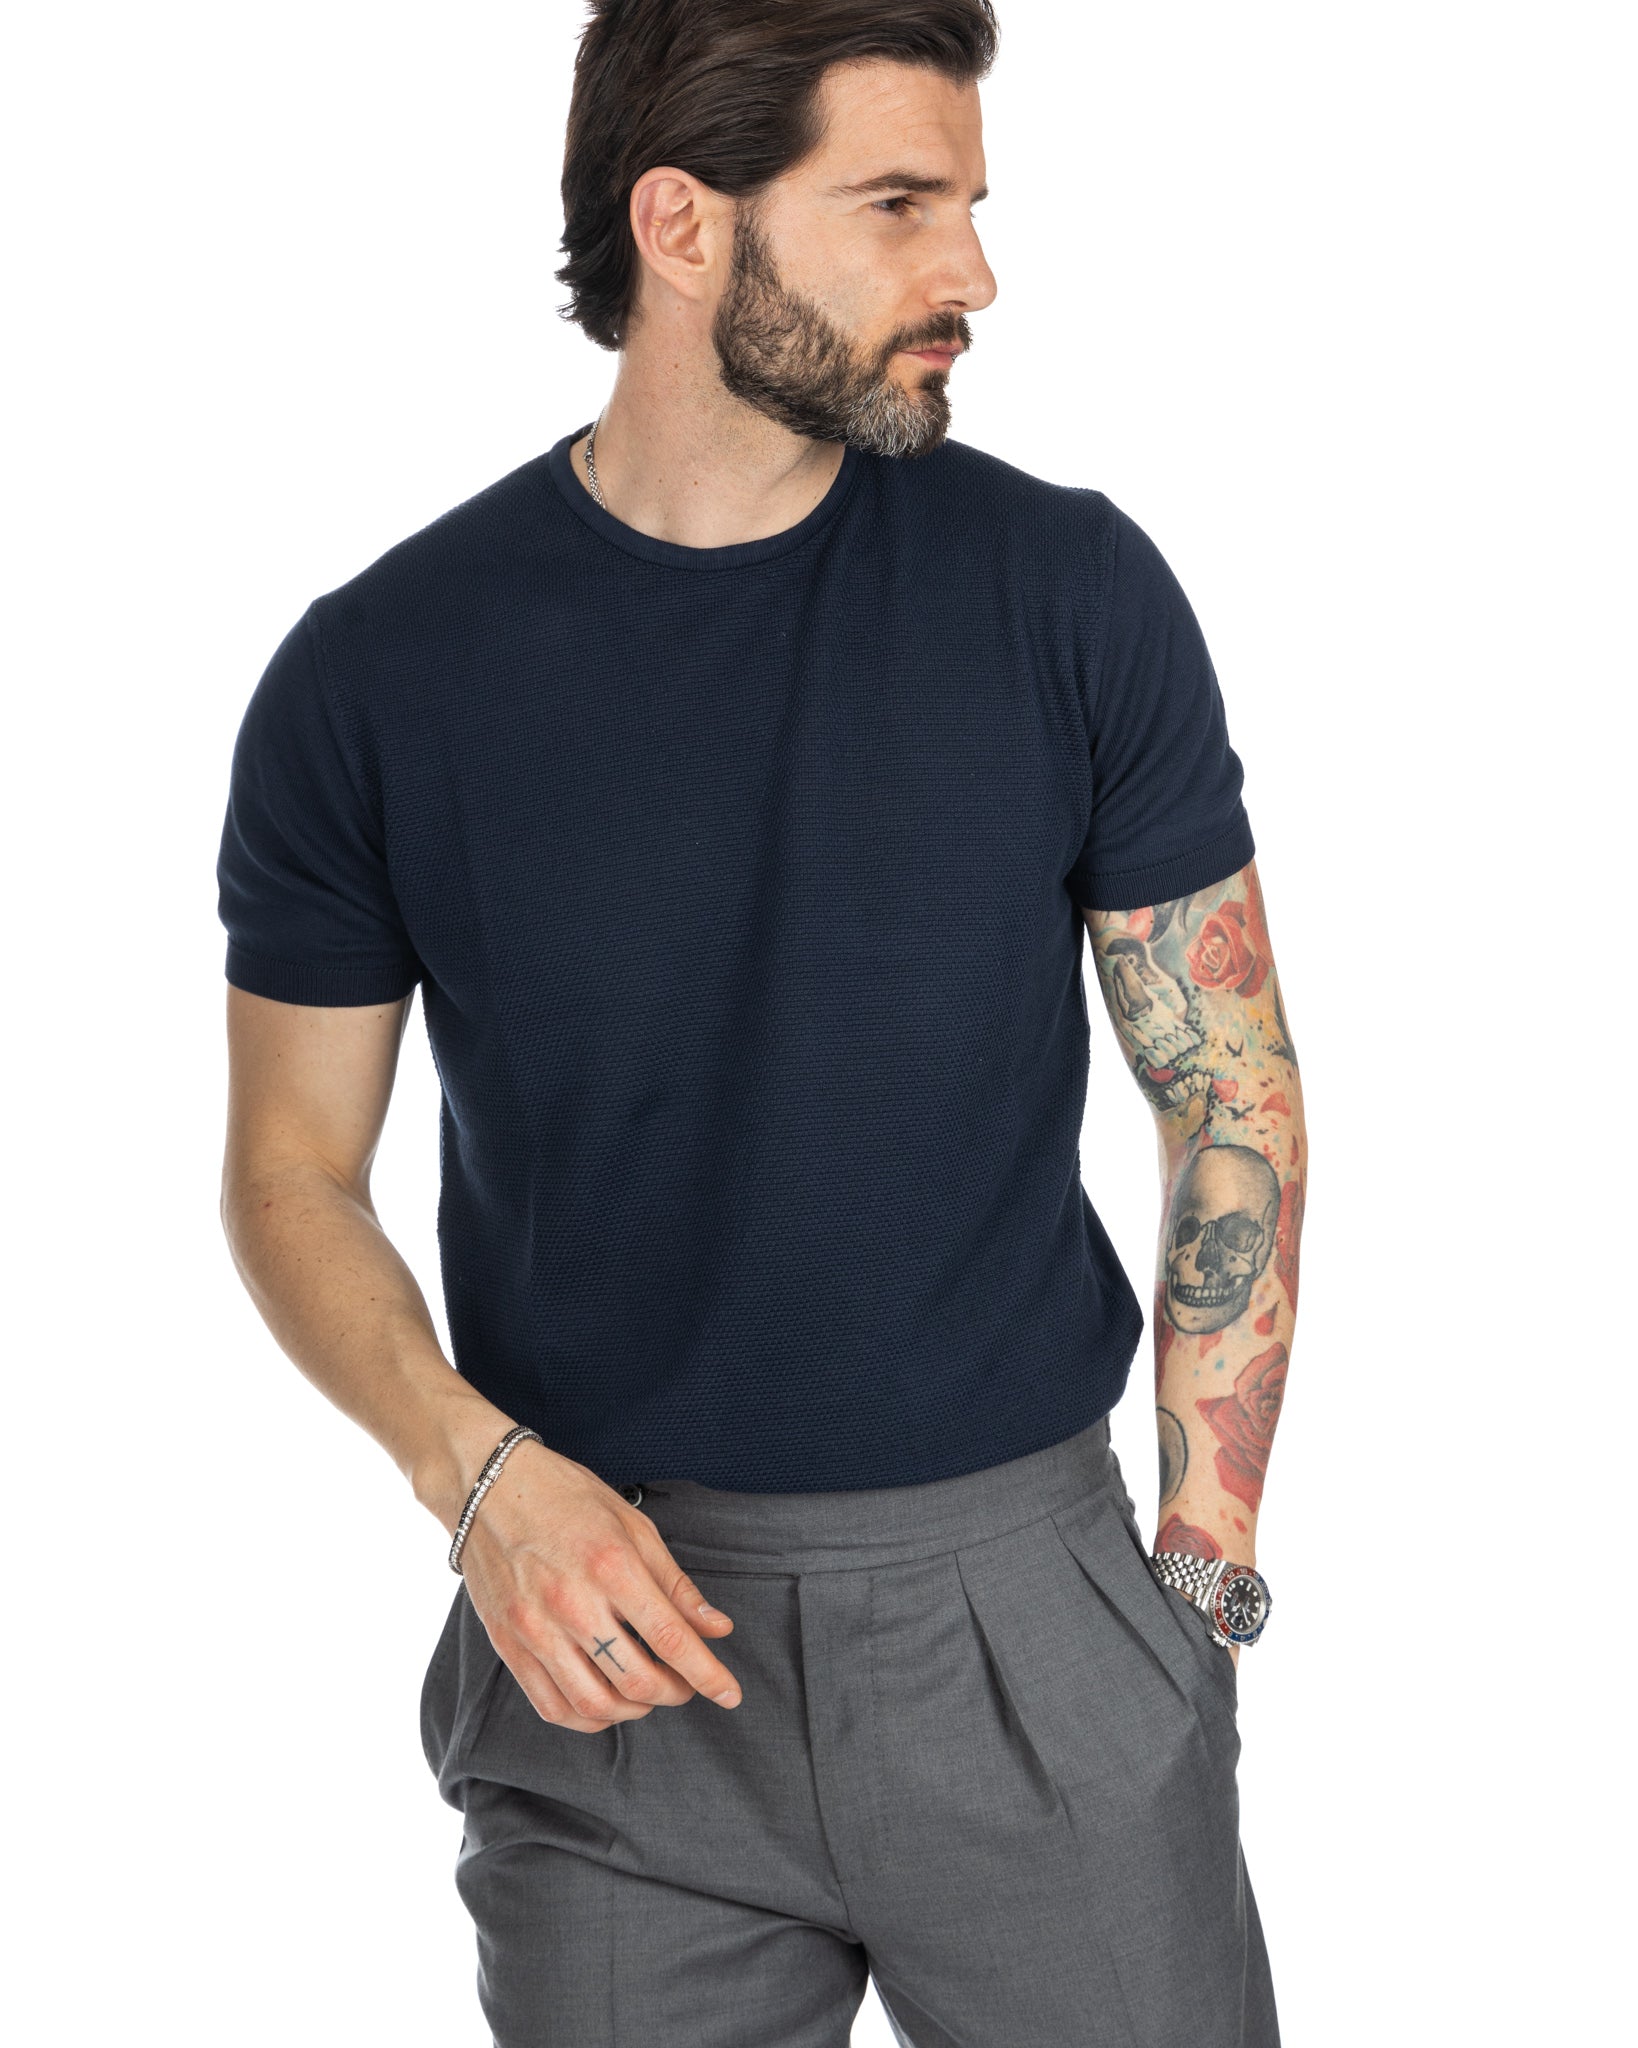 Lorenzo - blue jacquard knit t-shirt